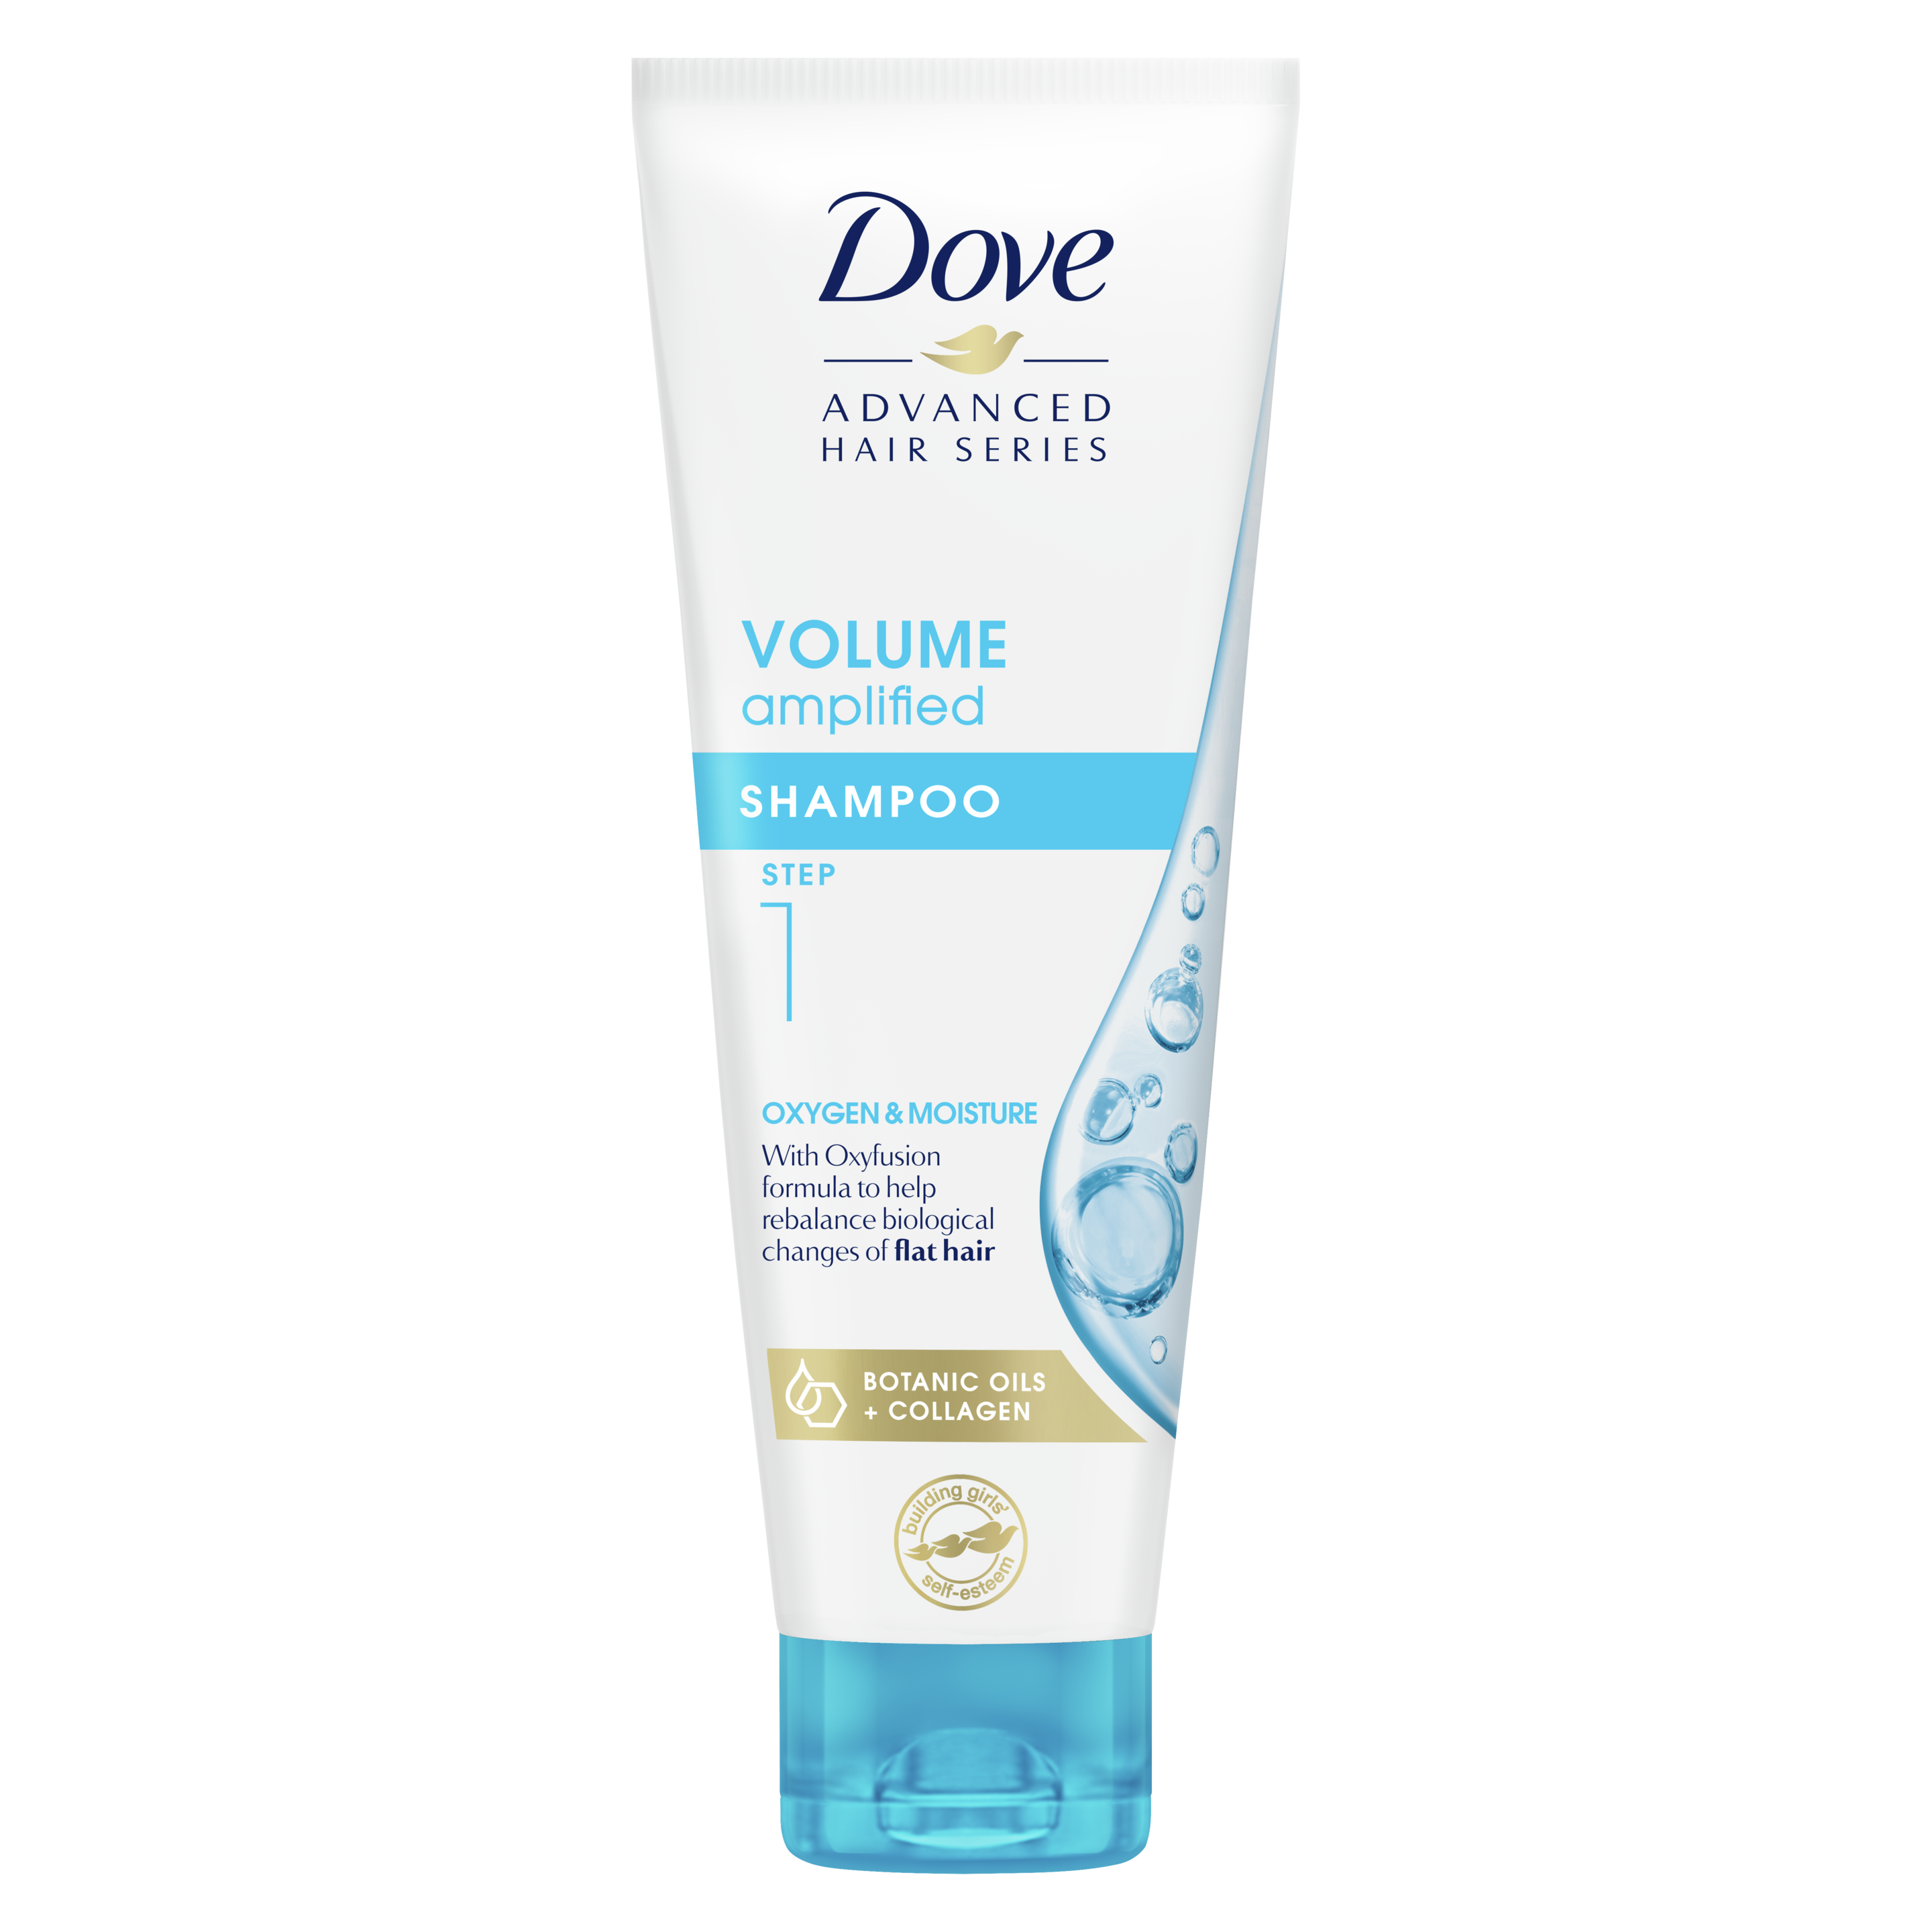 Dove Advanced Hair Series Oxygen & Moisture shampoo 250ml